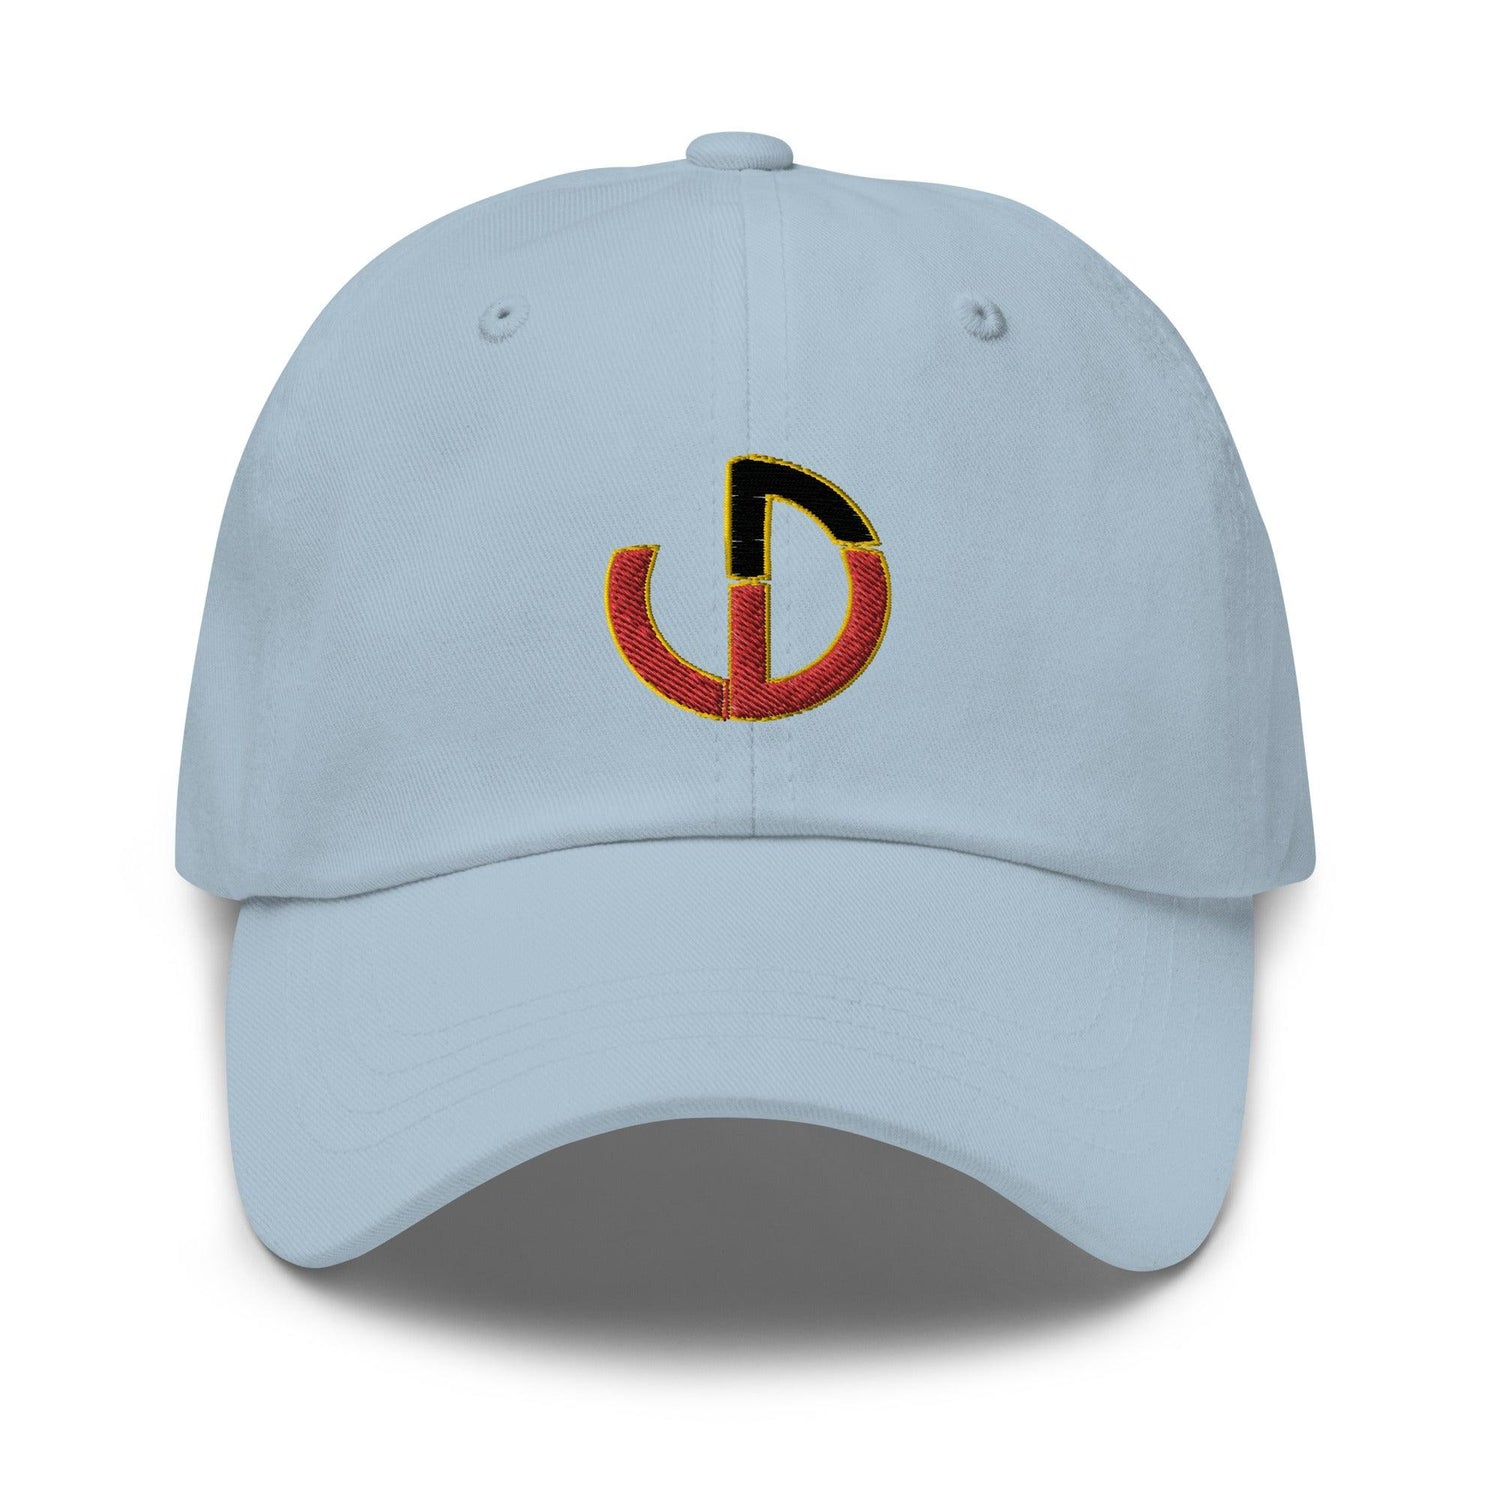 DeAnna Wilson "Essential" hat - Fan Arch